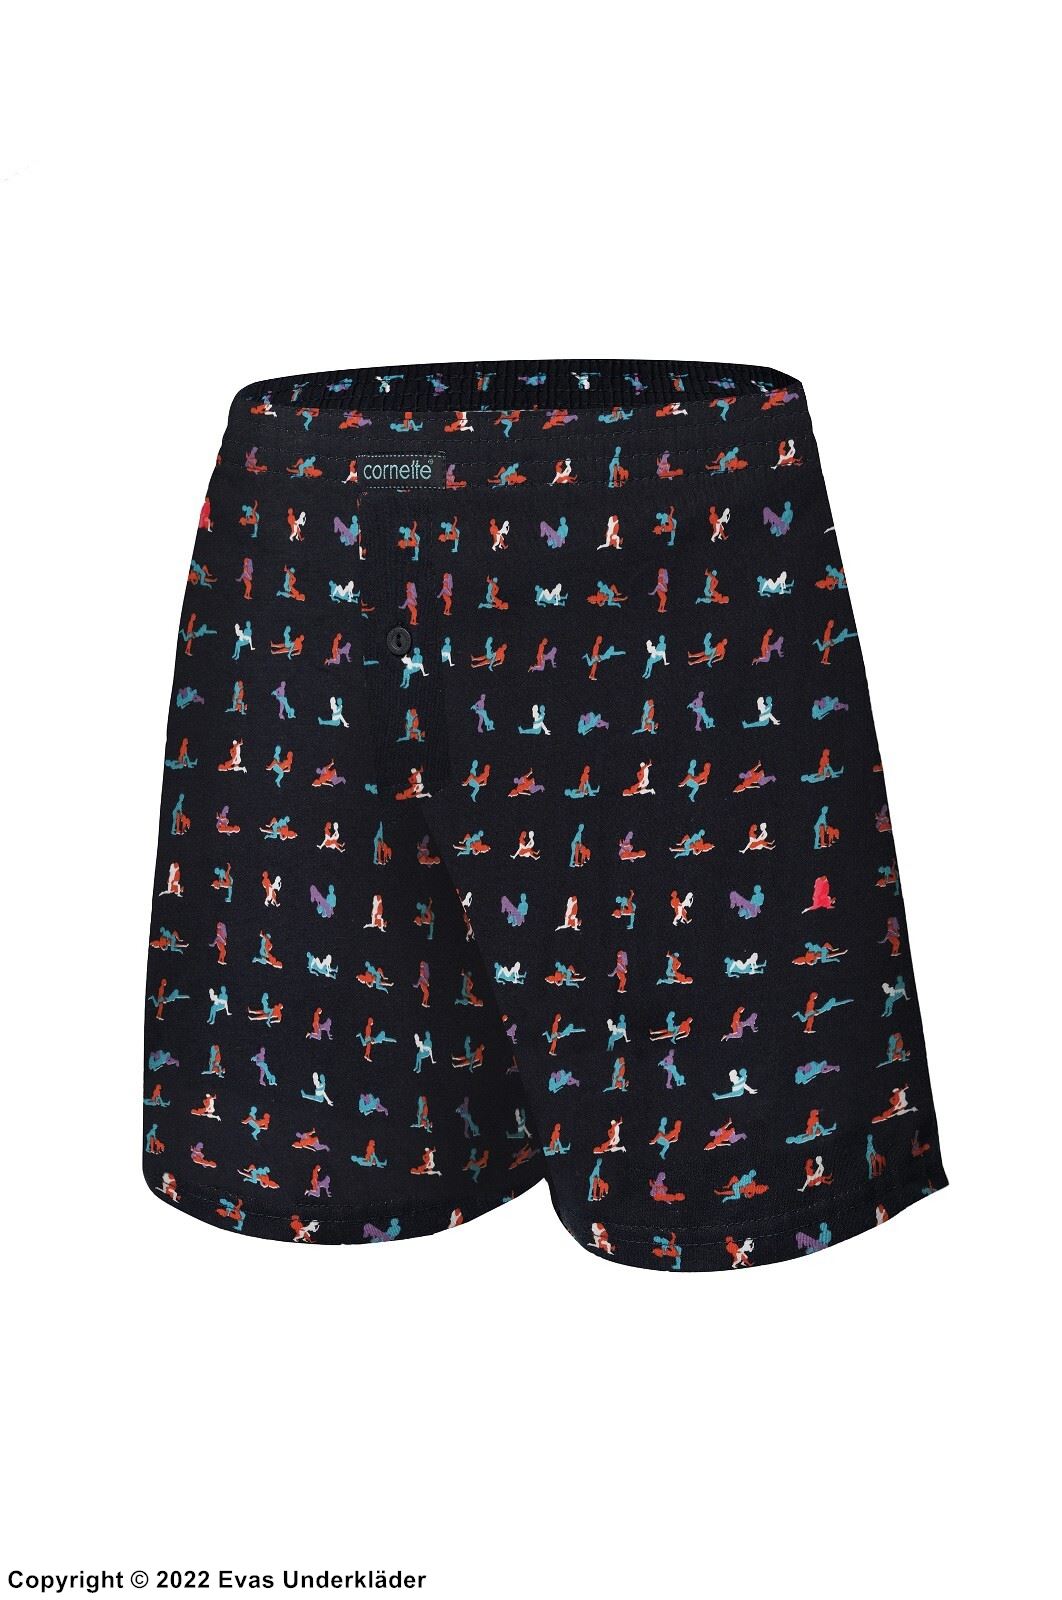 Men's boxer shorts, high quality cotton, love positions (pattern)